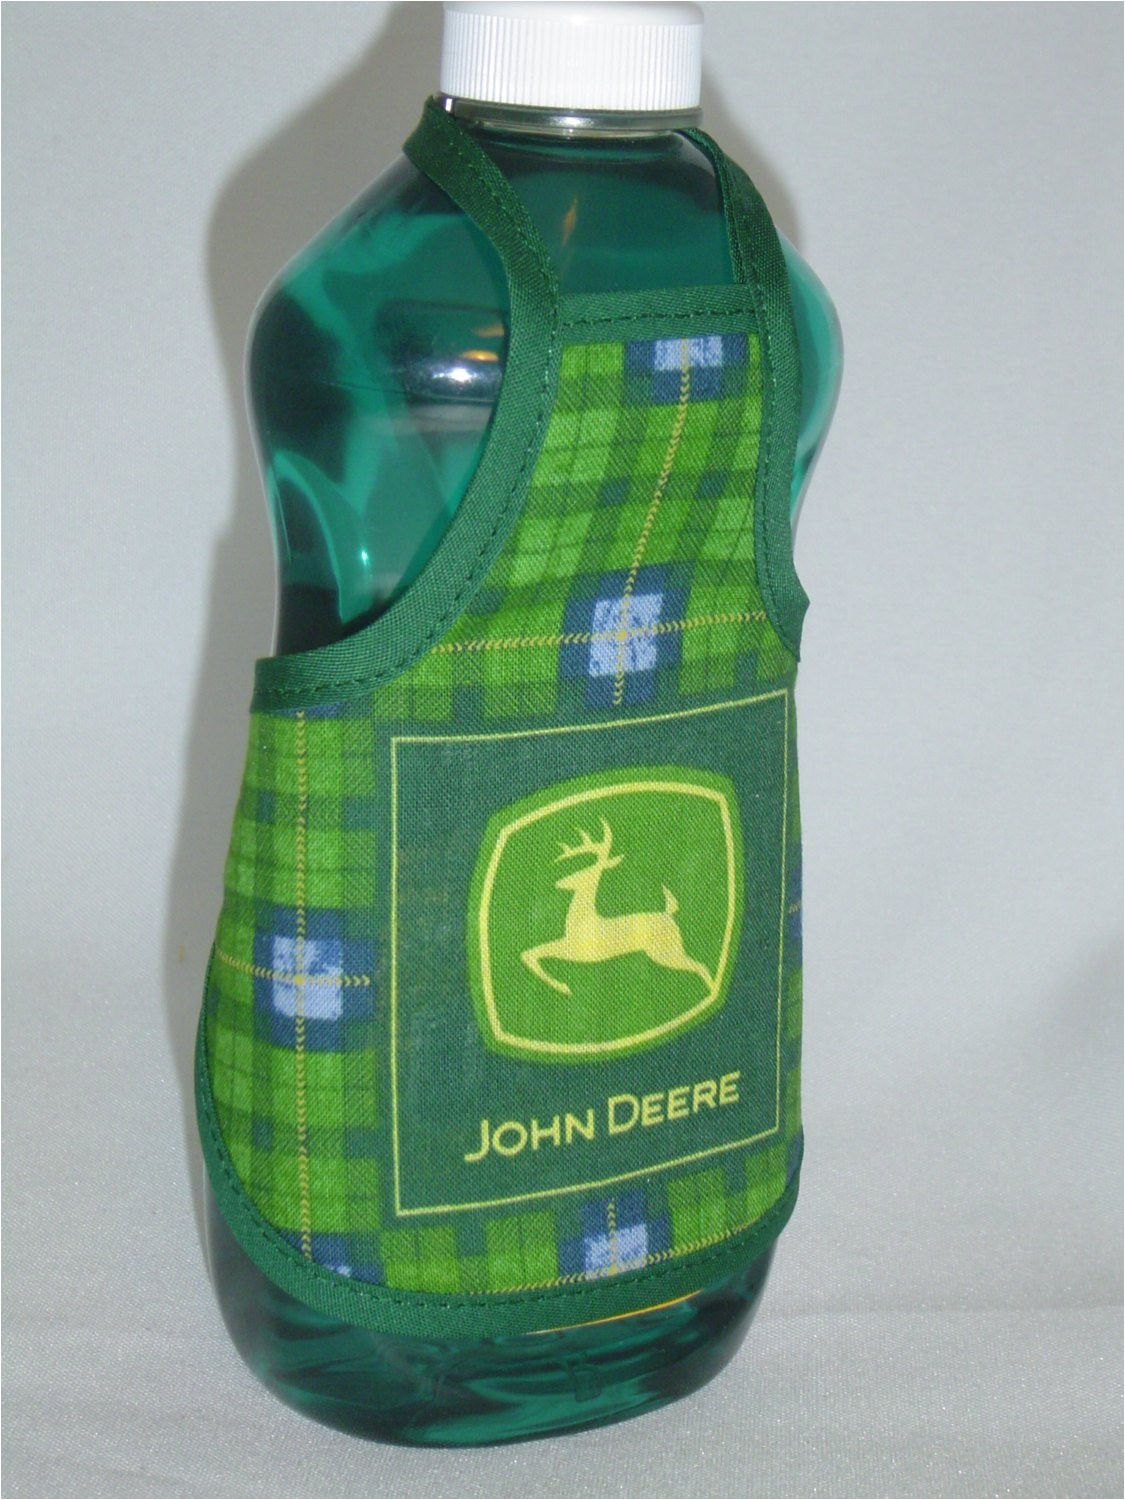 john deere kitchen decor dish soap utm medium product listing promoted utm source bing utm campaign housewares cleaning